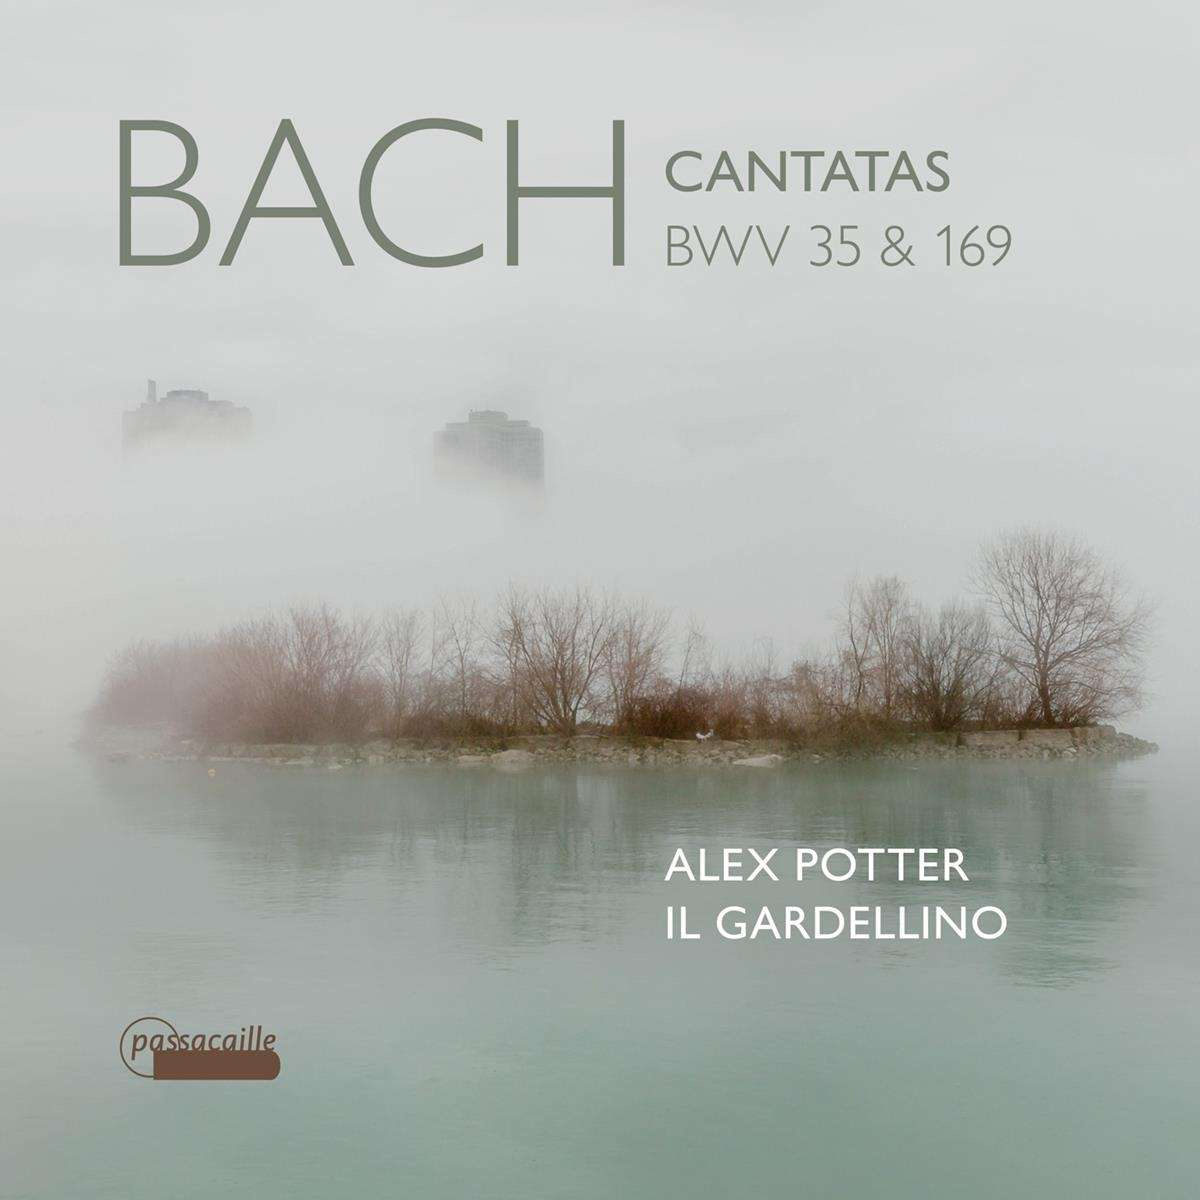 JOHANN SEBASTIAN BACH: CANTATAS BWV 35 & 169 / TOCCATA, ADAGIO & FUGUE BWV 564